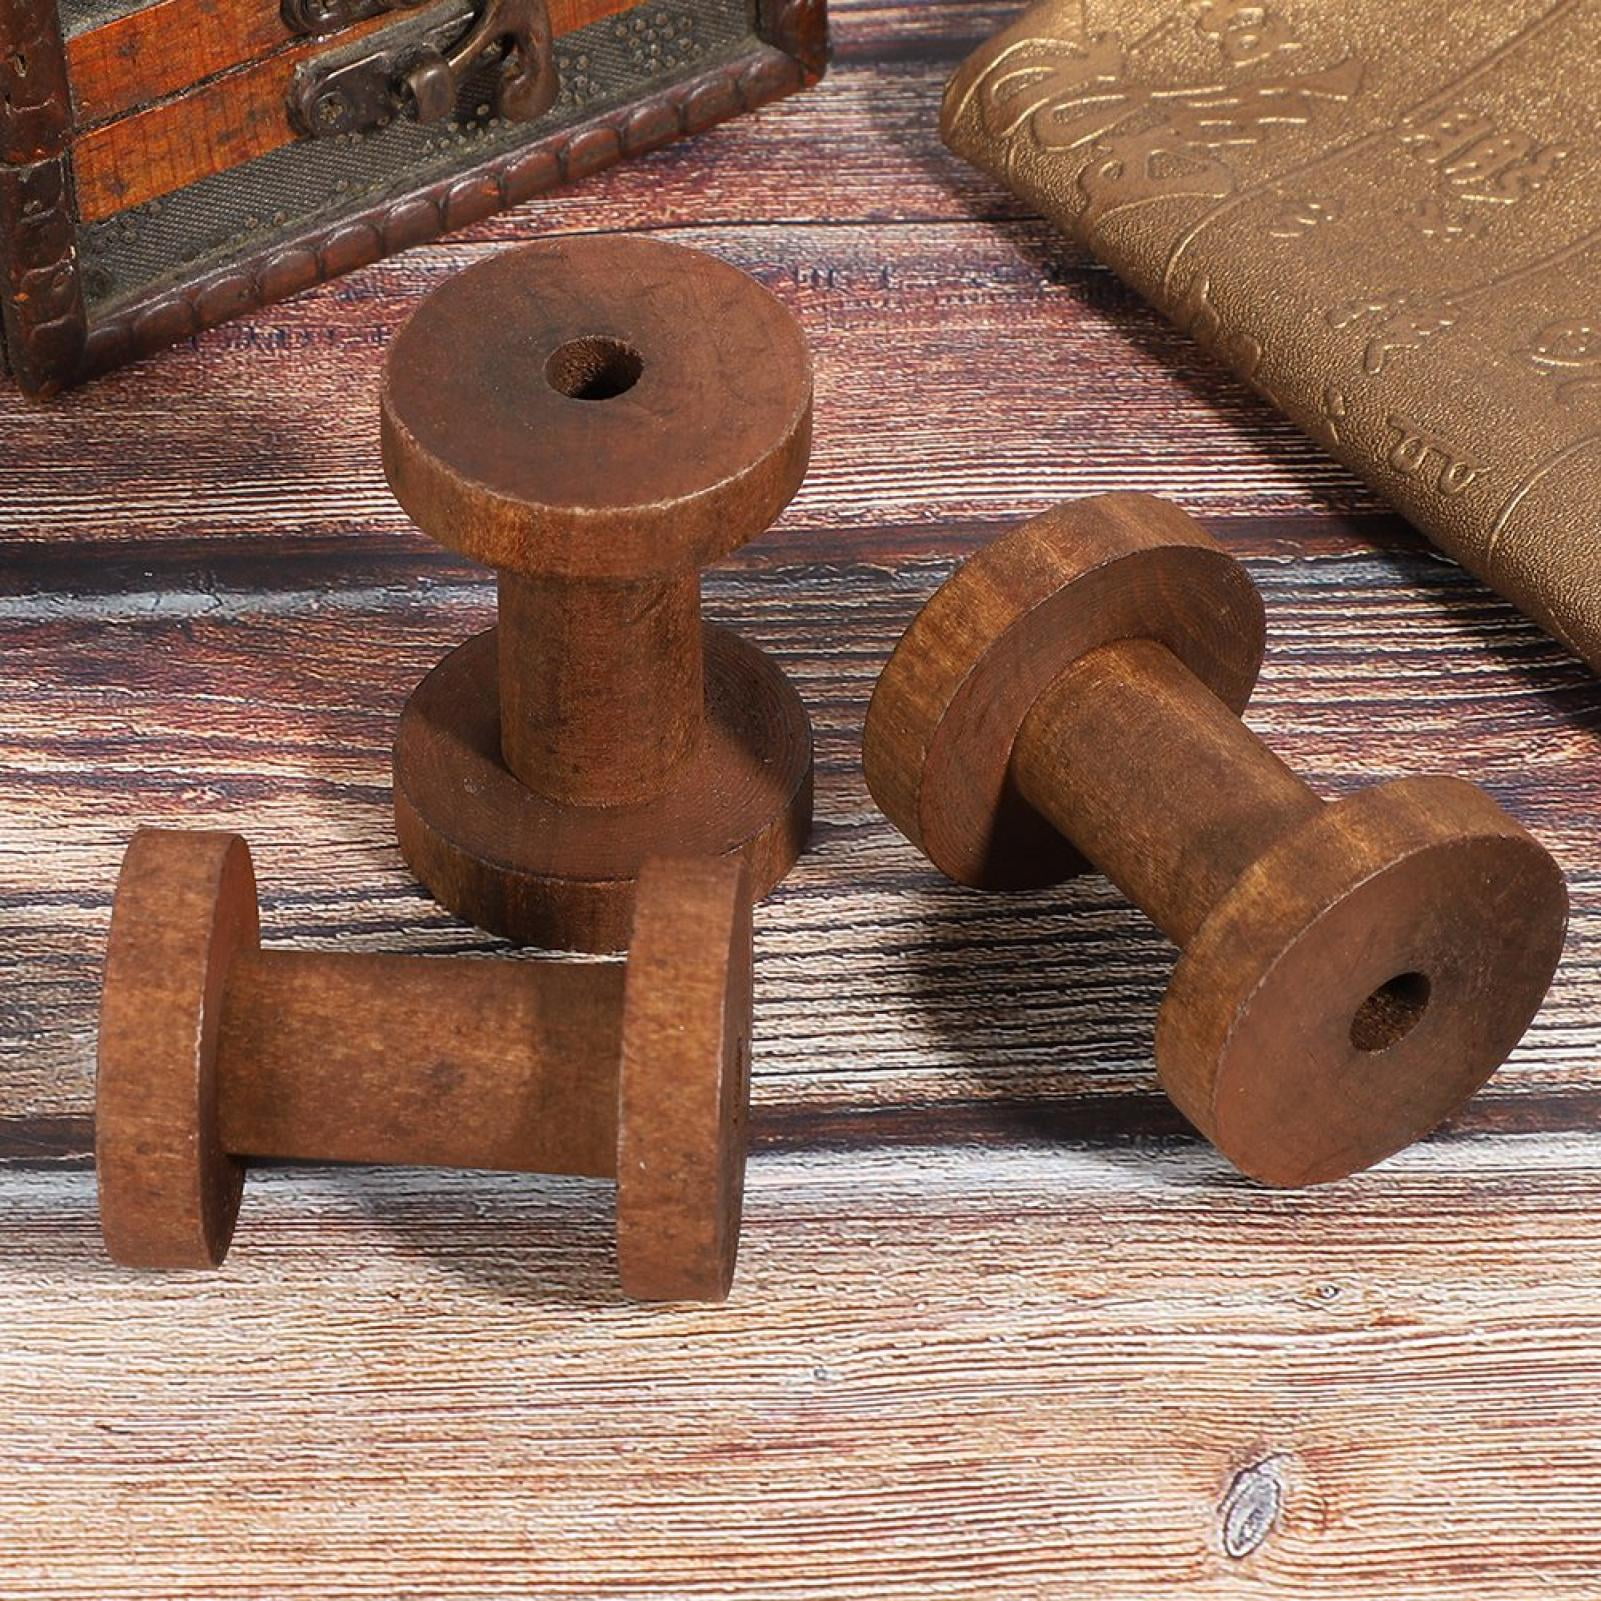 3 Pcs Wooden Spools Reels Dark Brown Thread Bobbins Coil Sewing Threading Tools 